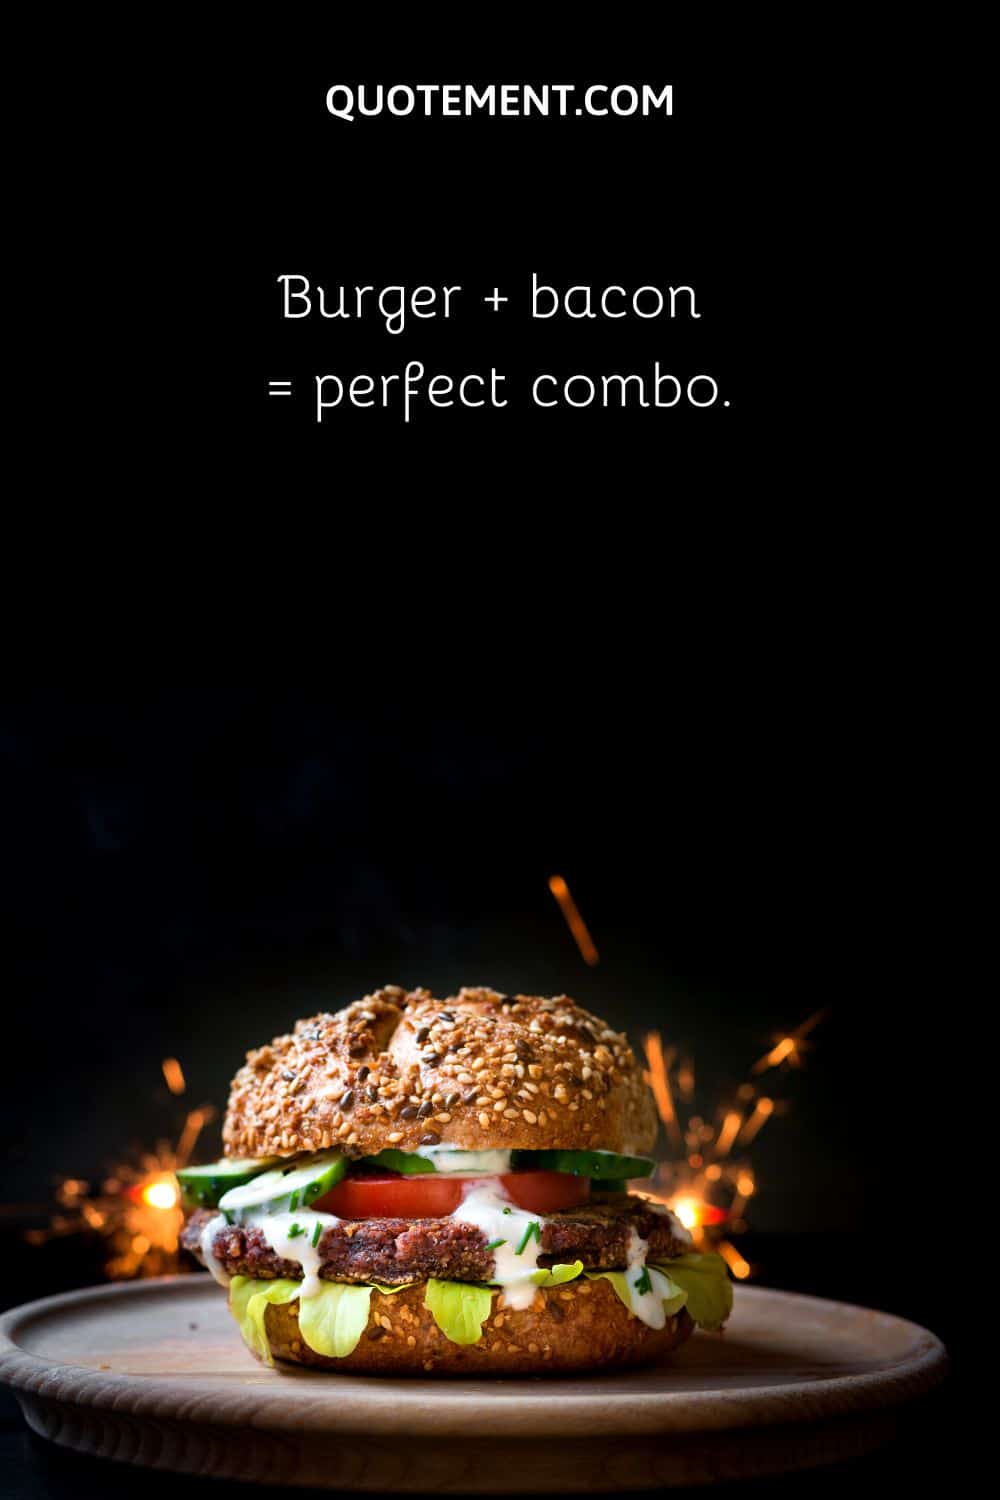 Burger + bacon = perfect combo.